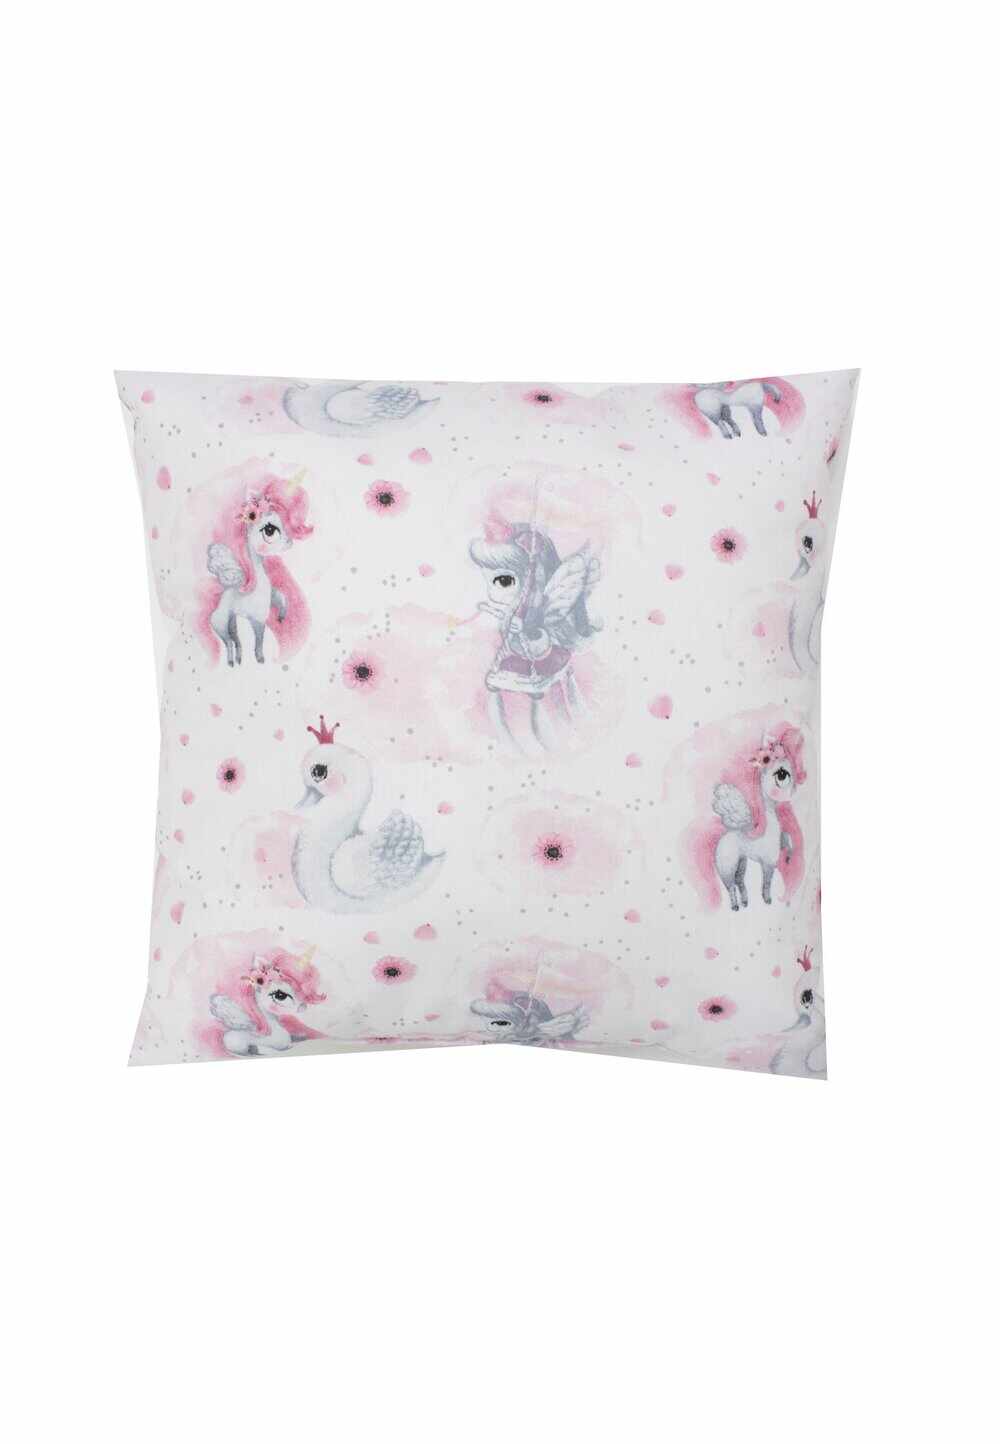 Perna cu Unicorn, roz, 38x38 cm